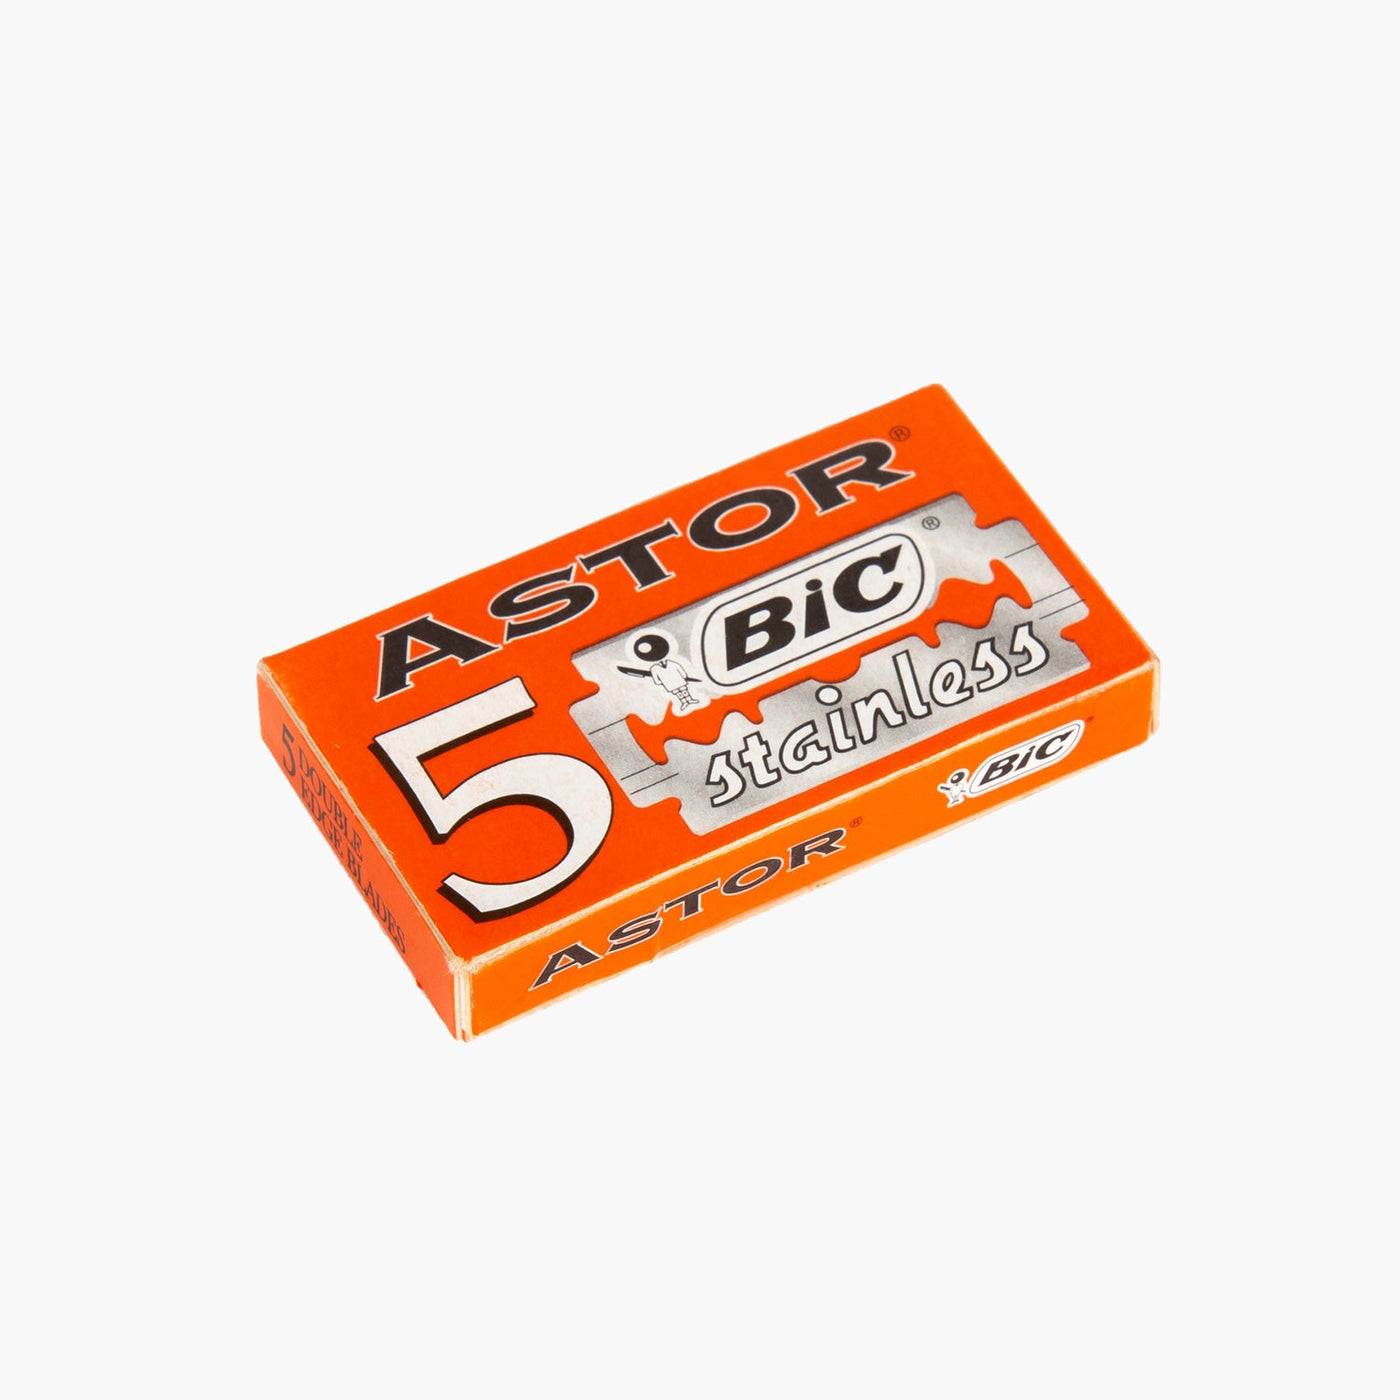 BIC Astor Stainless Safety Blades Pack of 5 (25 Blades) - Razors & Razor BladesPinkWoolf